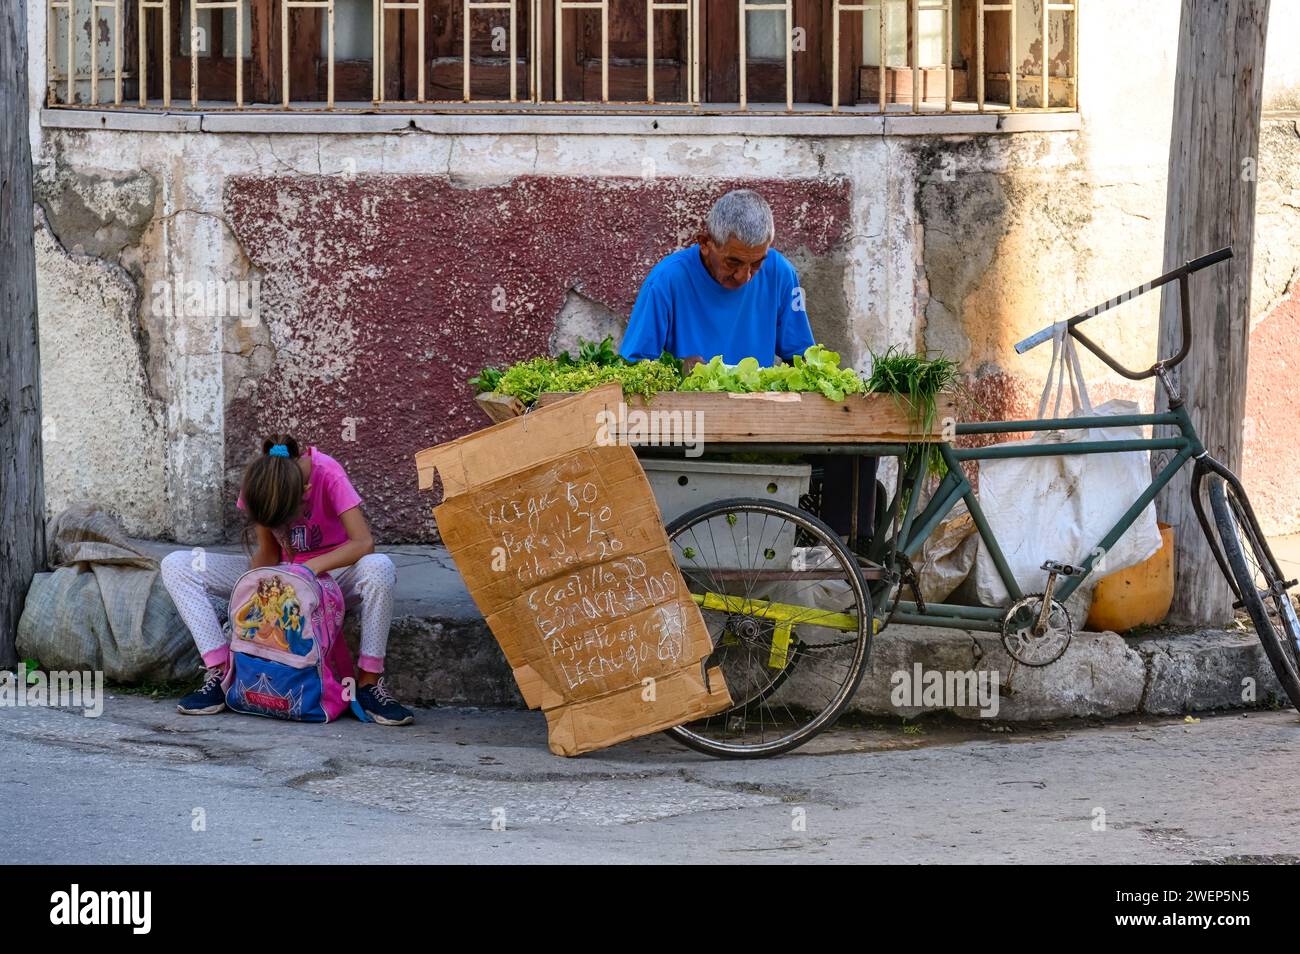 senior man selling vegetables in city corner, santa clara, cuba Stock Photo